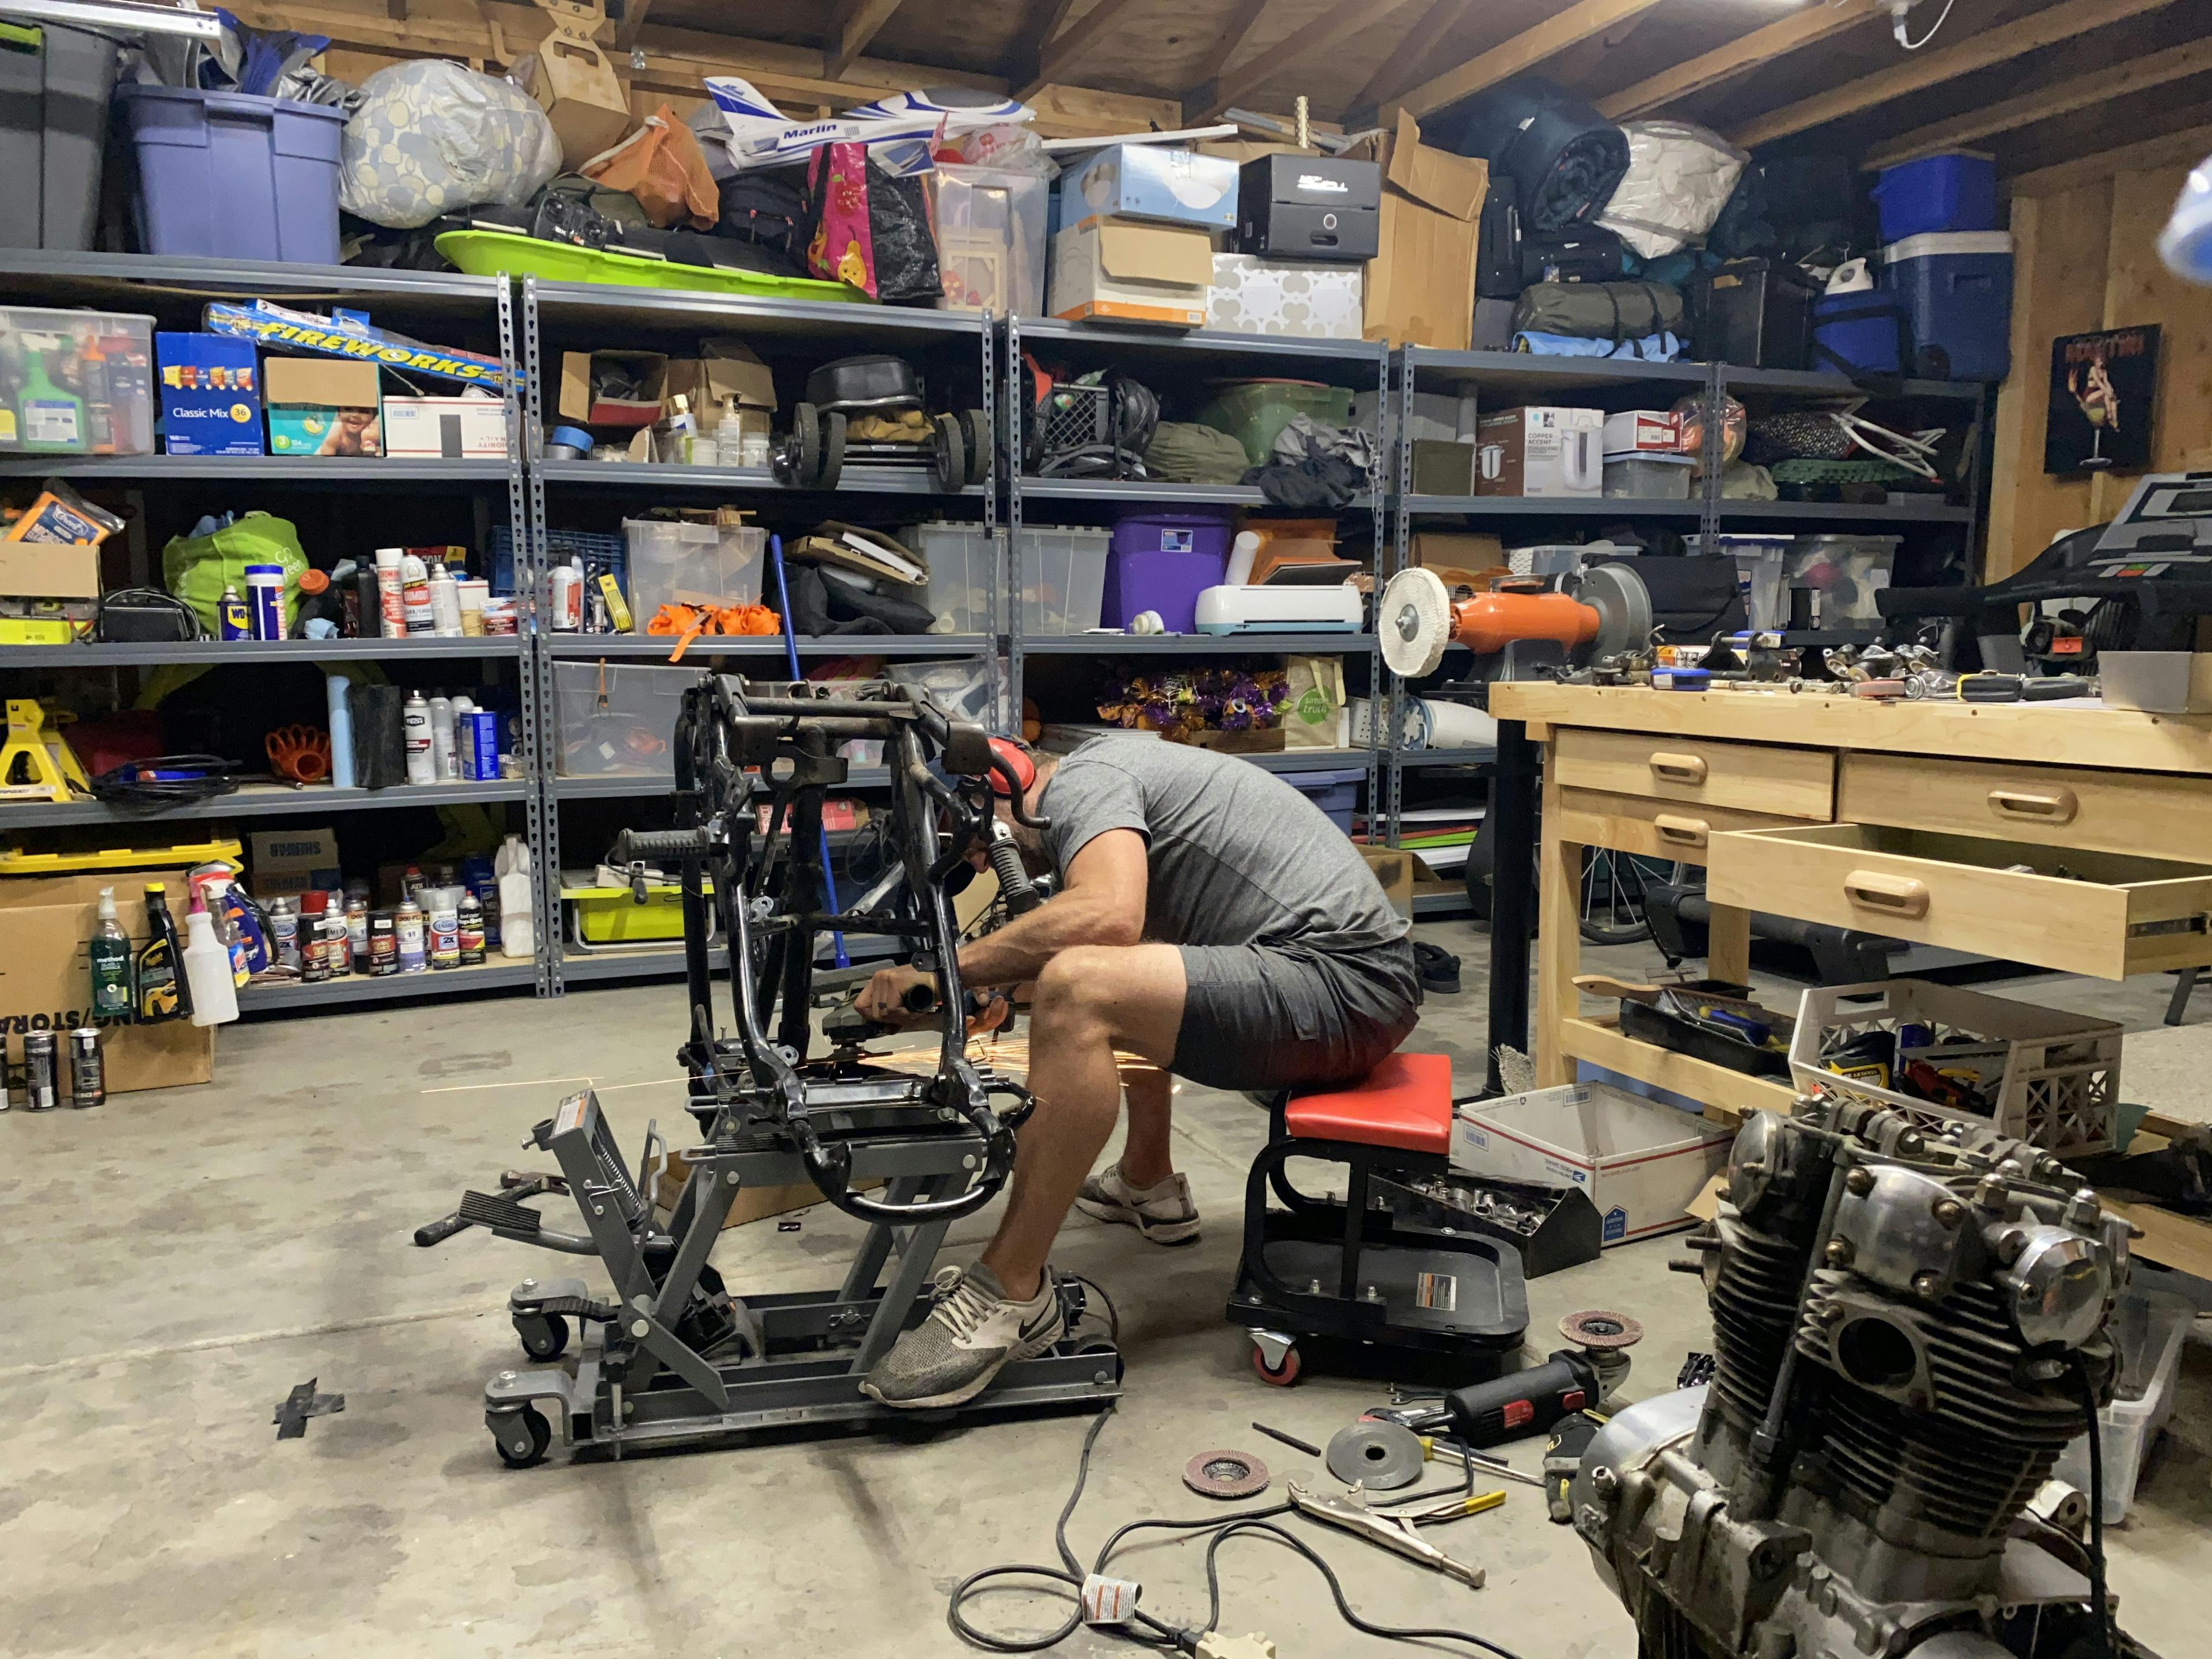 Nick Murdock Salt Lake working on his de-tabbing his bike frame